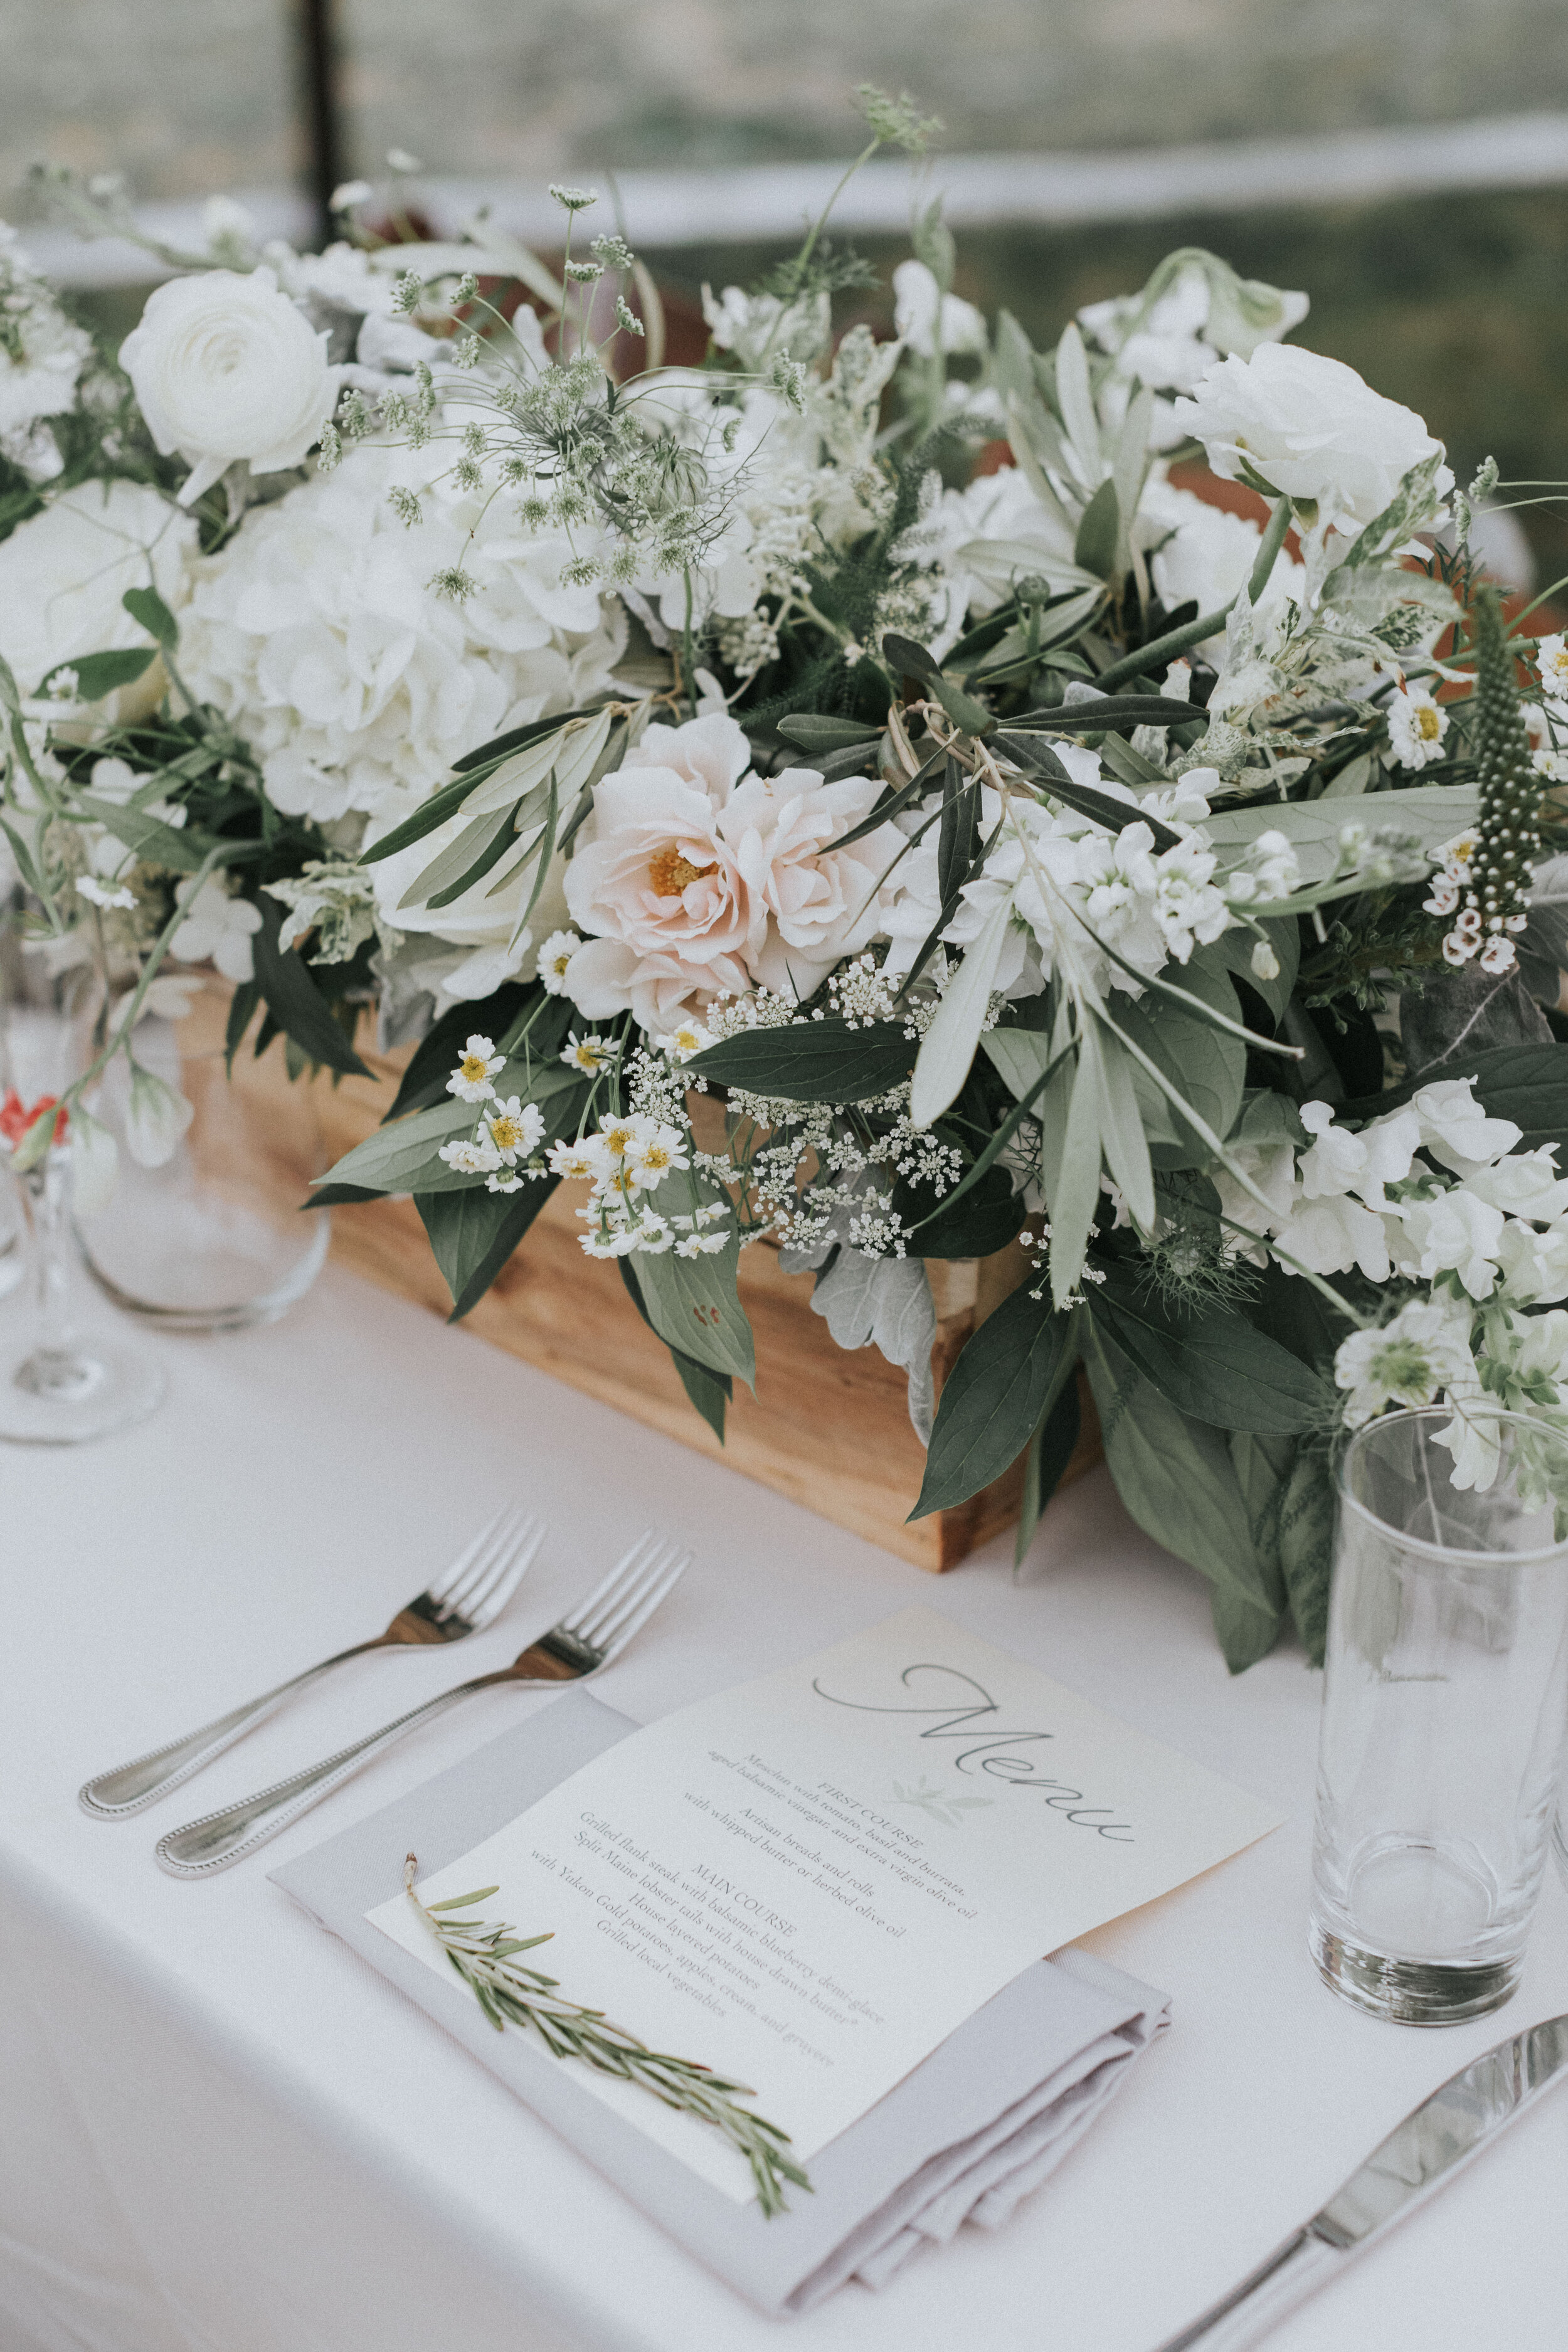 neutral floral arrangement and reception tablescape at Maine wedding